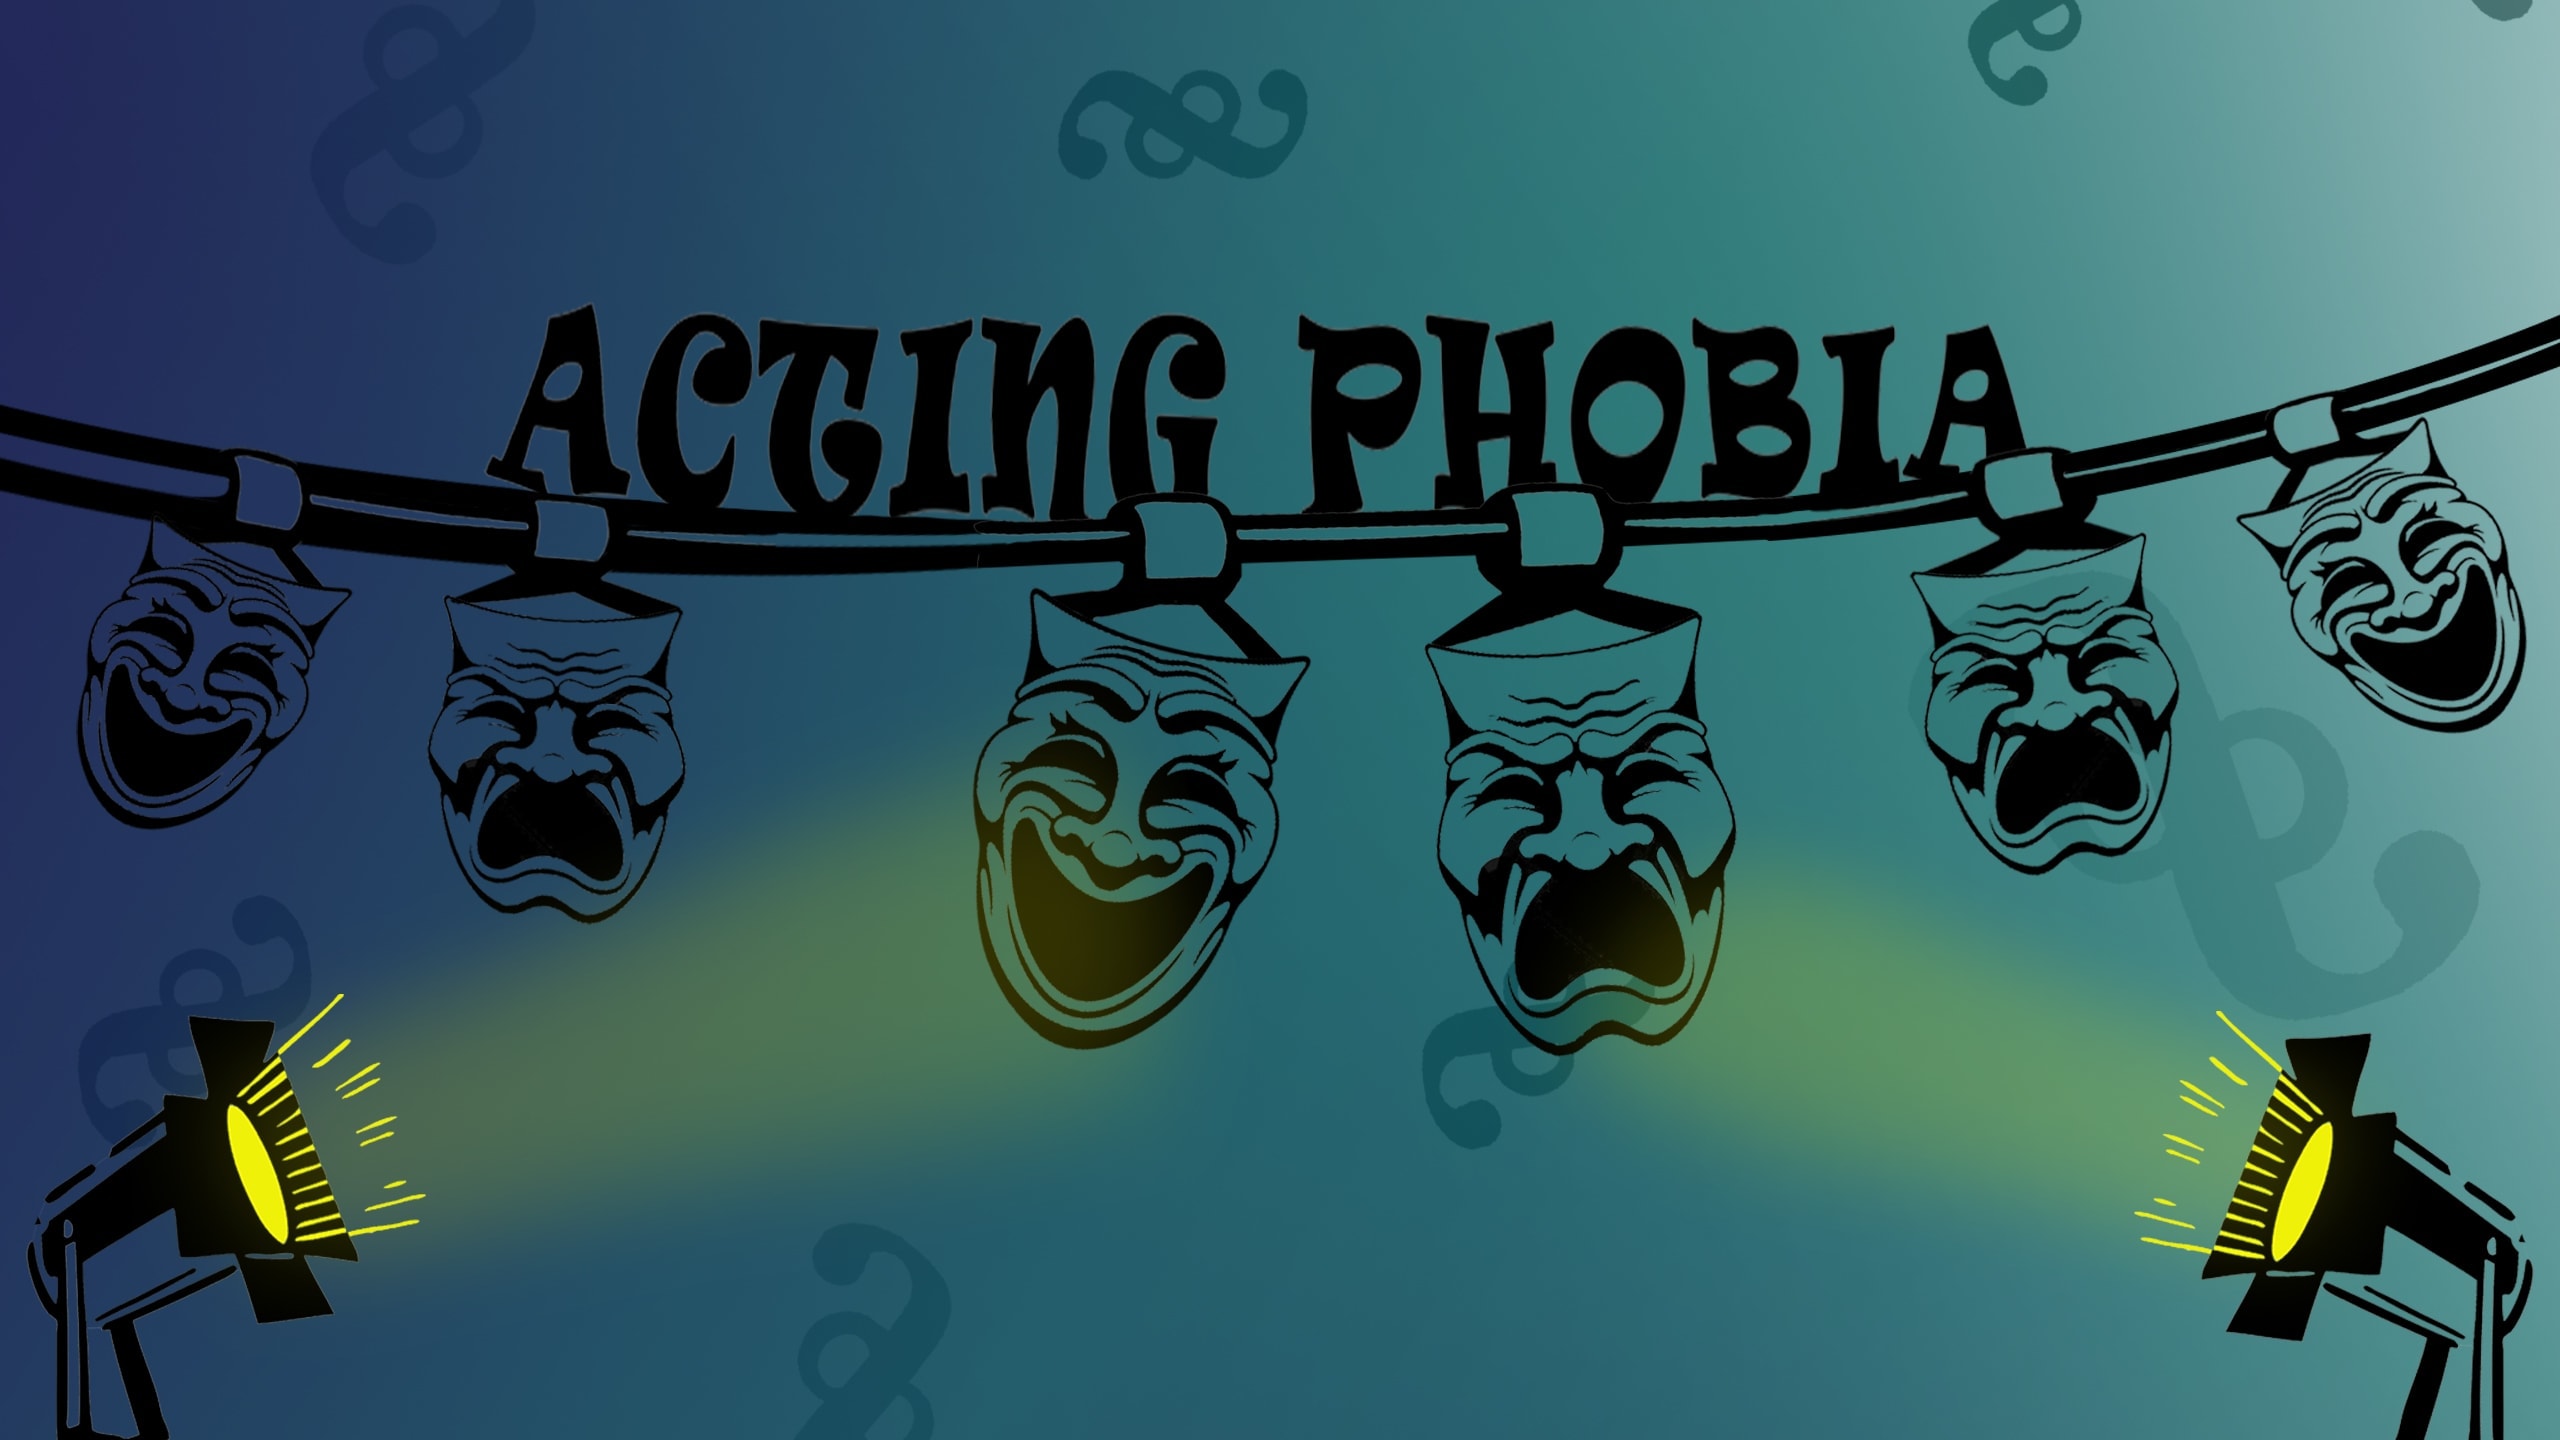 Acting Phobia